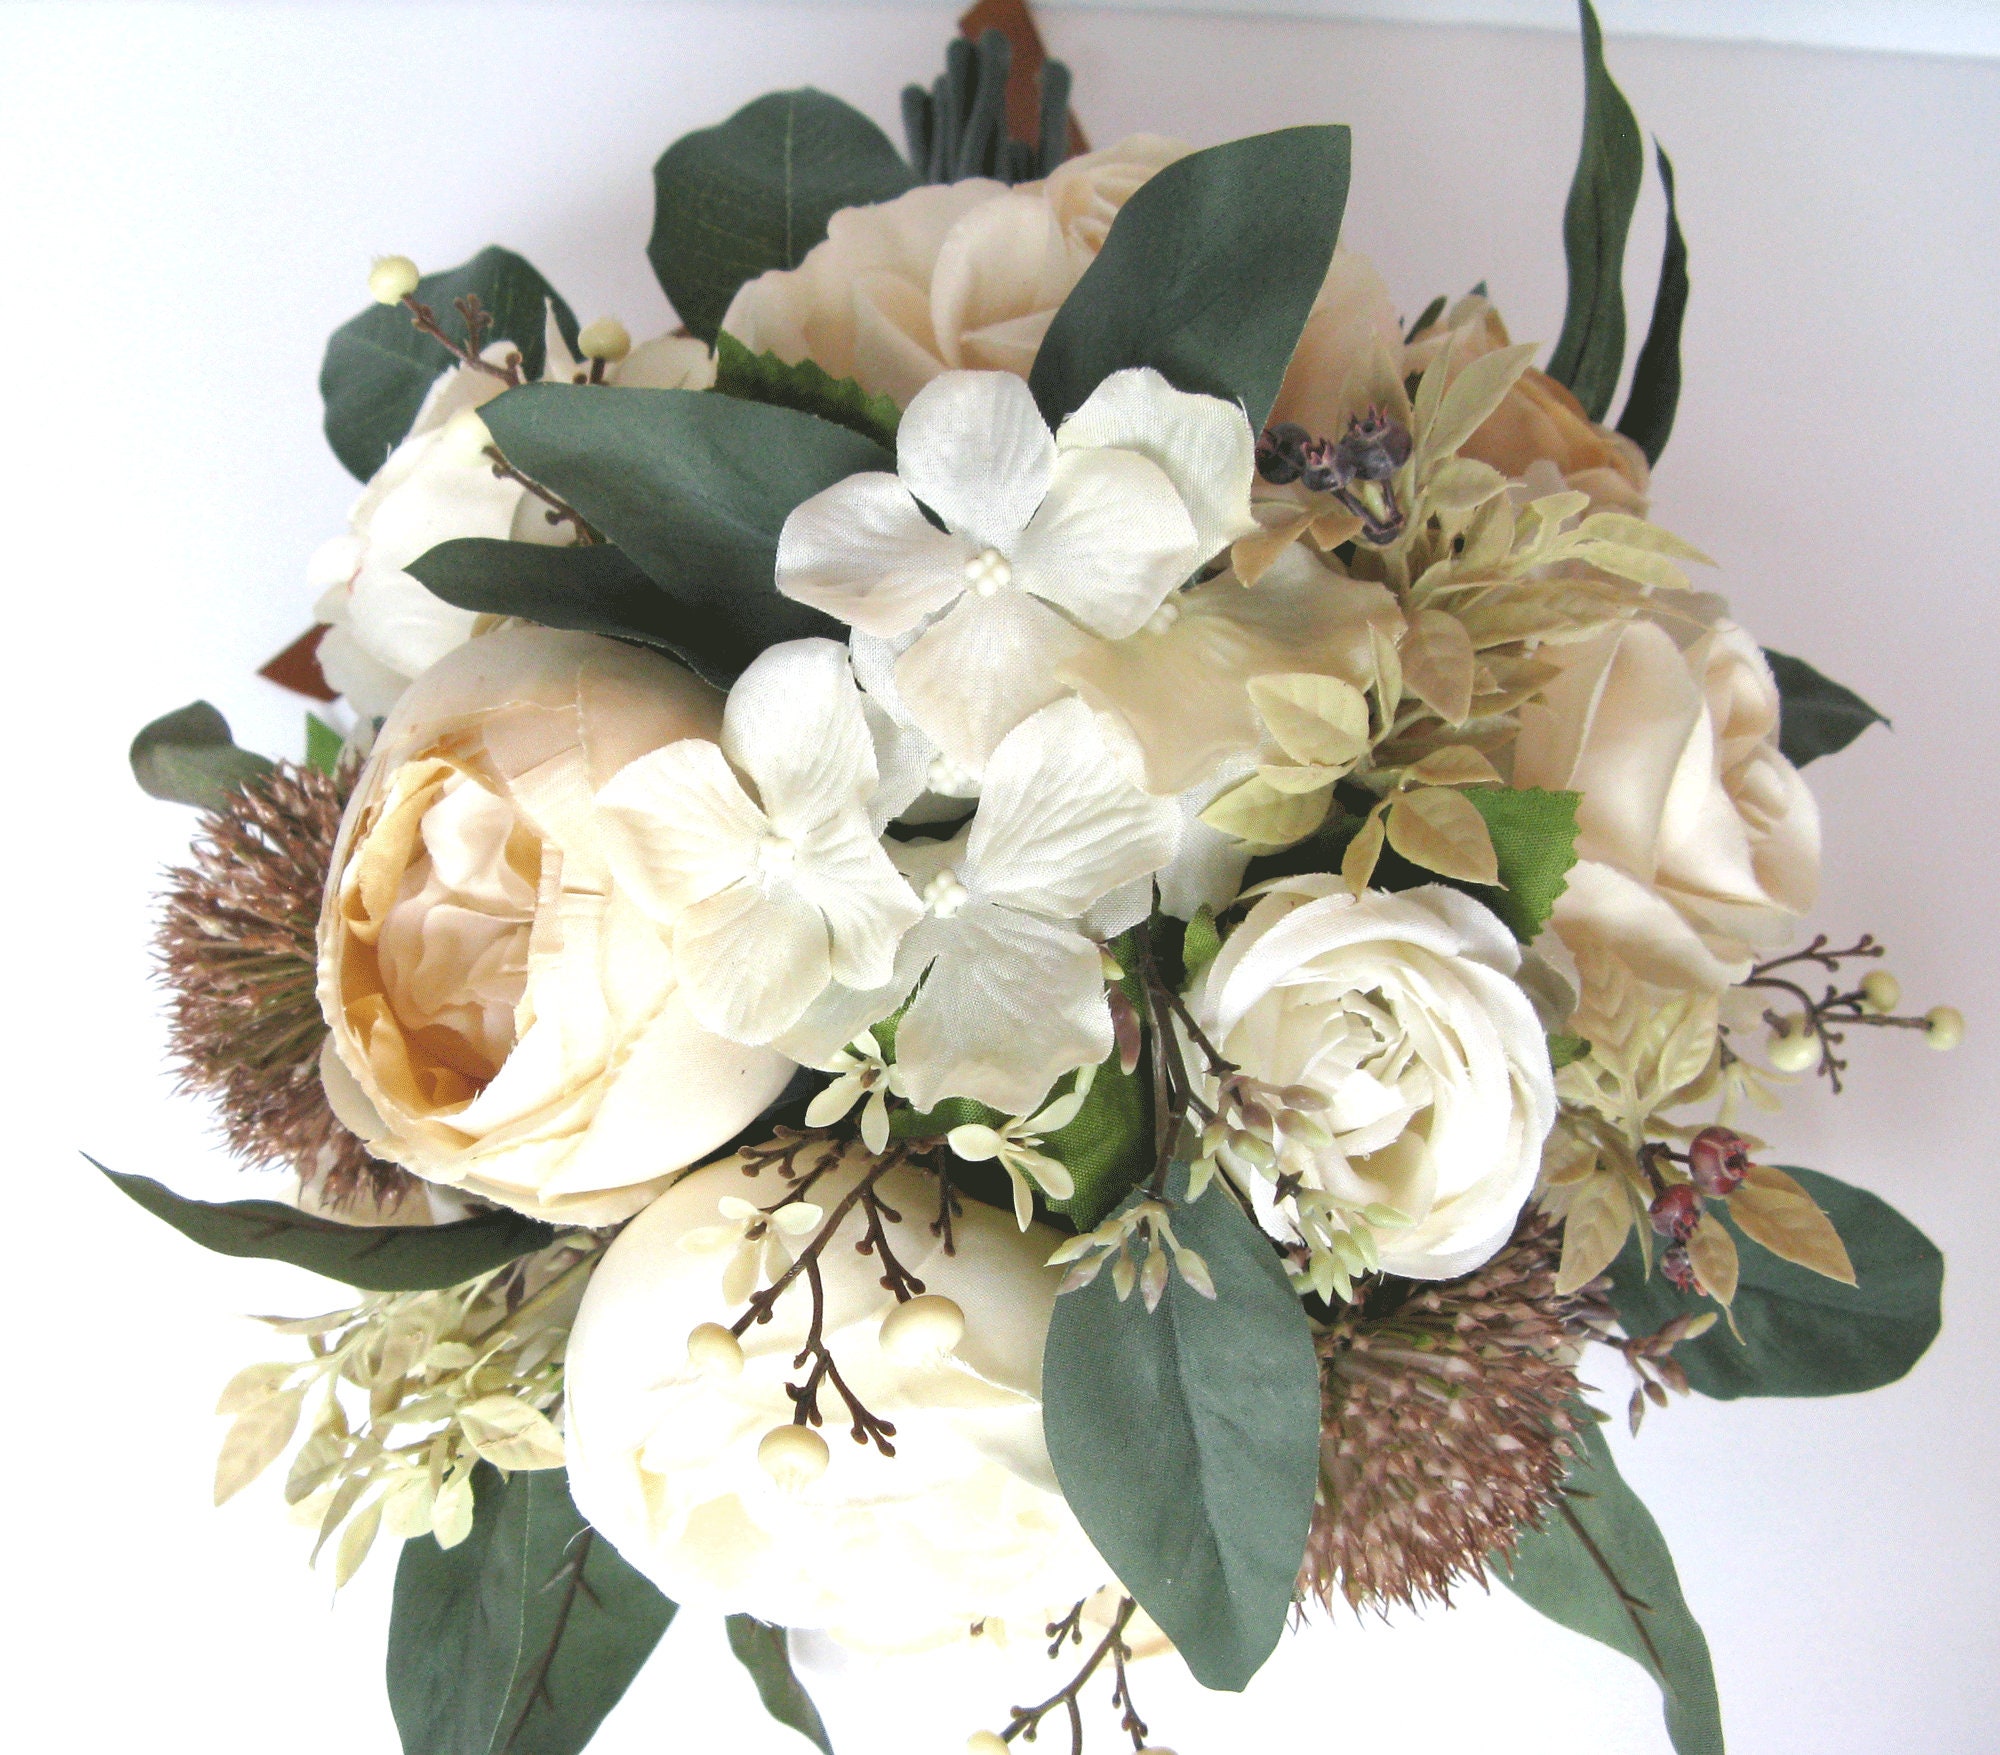 Cream Satin Floral & Rhinestone Bridal Bouquet – Unique Vintage